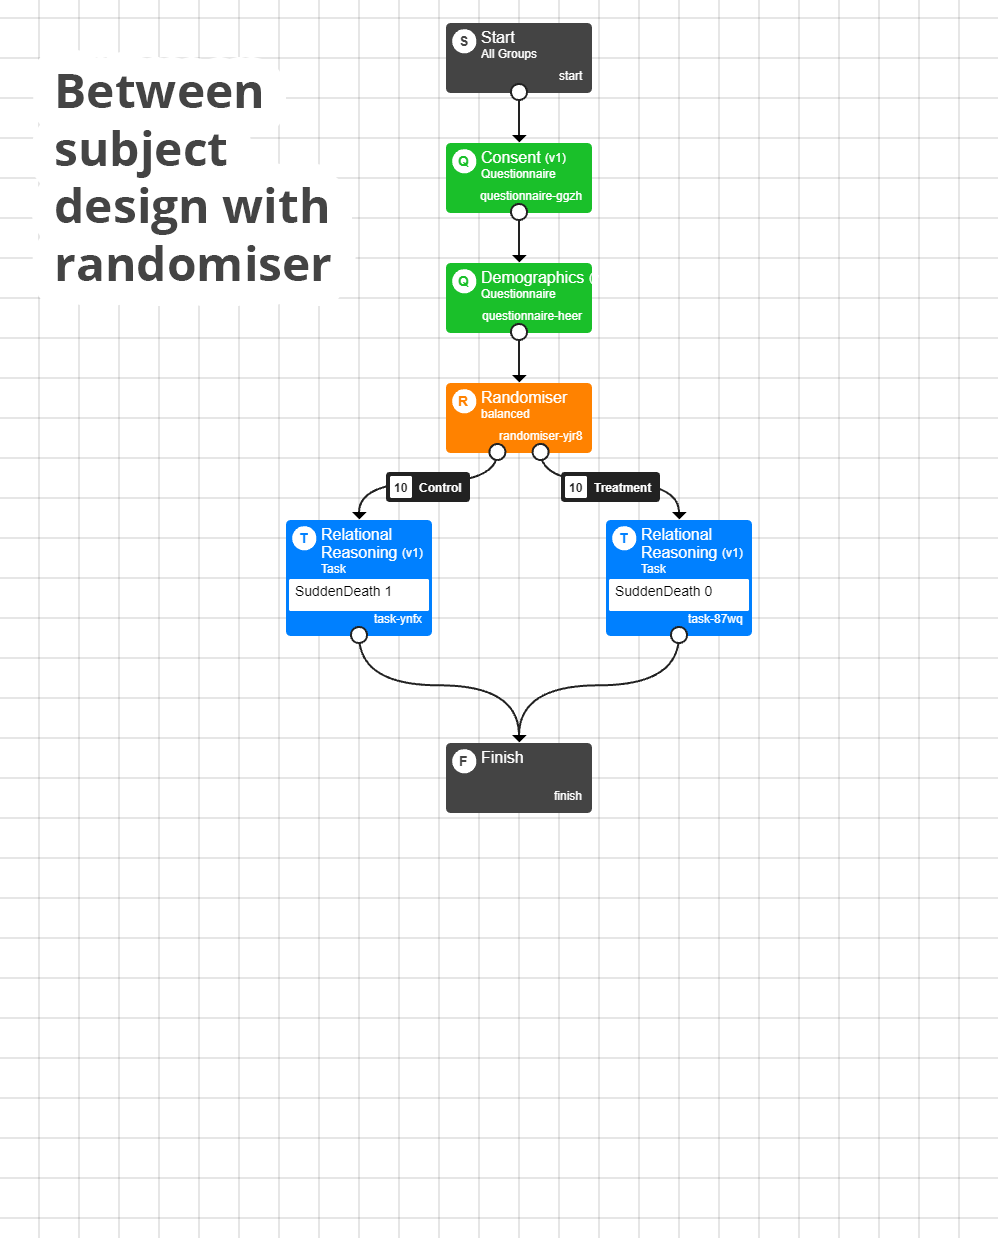 Screenshot of Experiment Builder showing a between-subject design with a randomizer